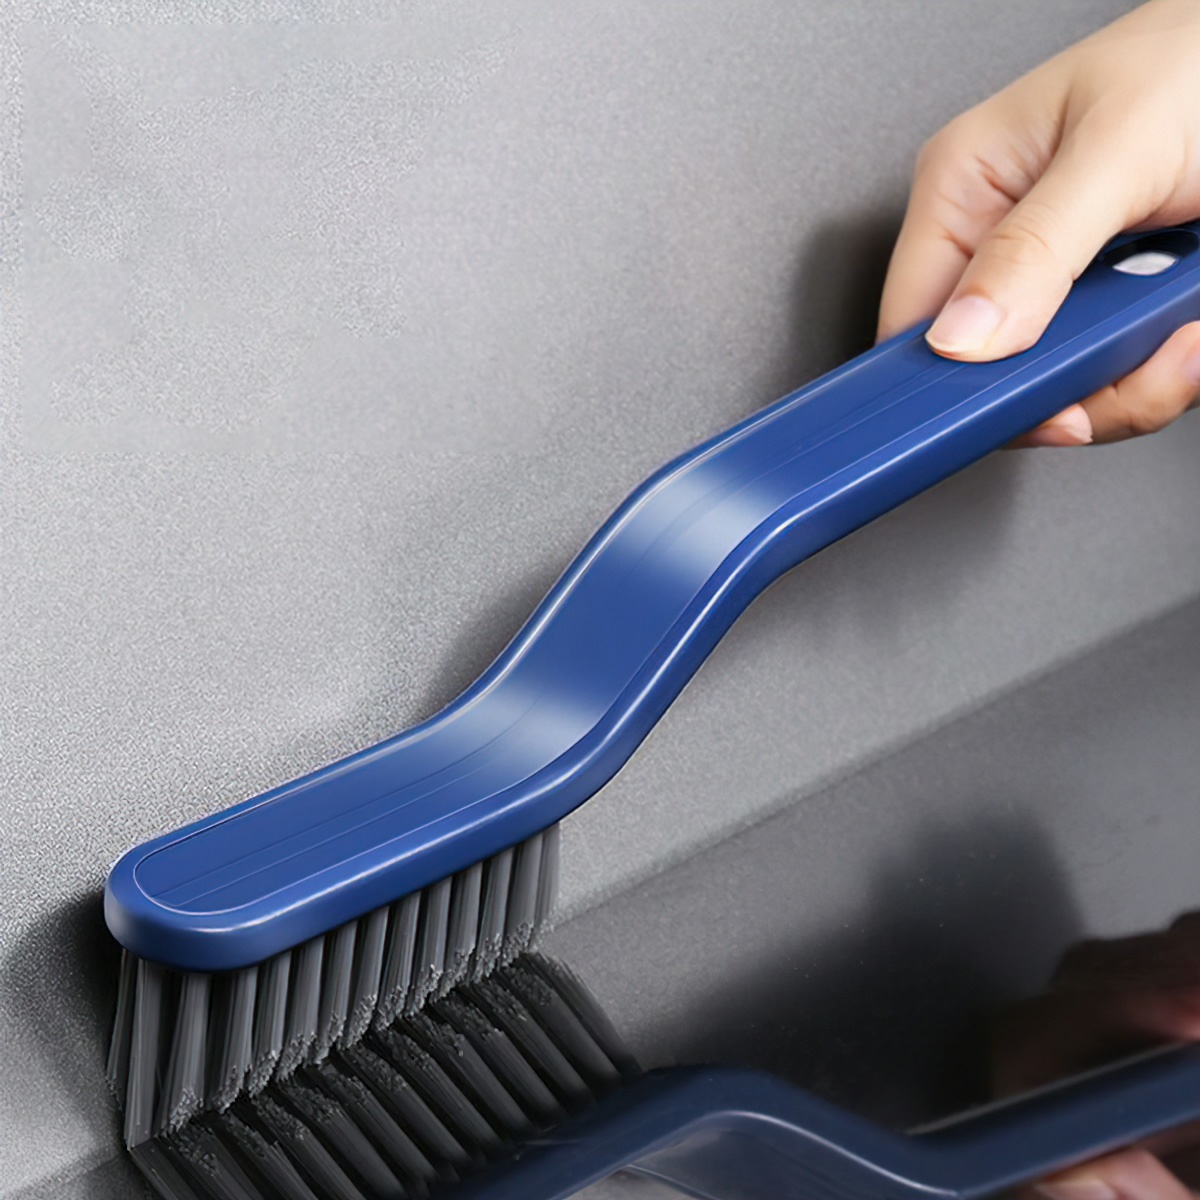 A hygienic scrubby multipurpose steel brush